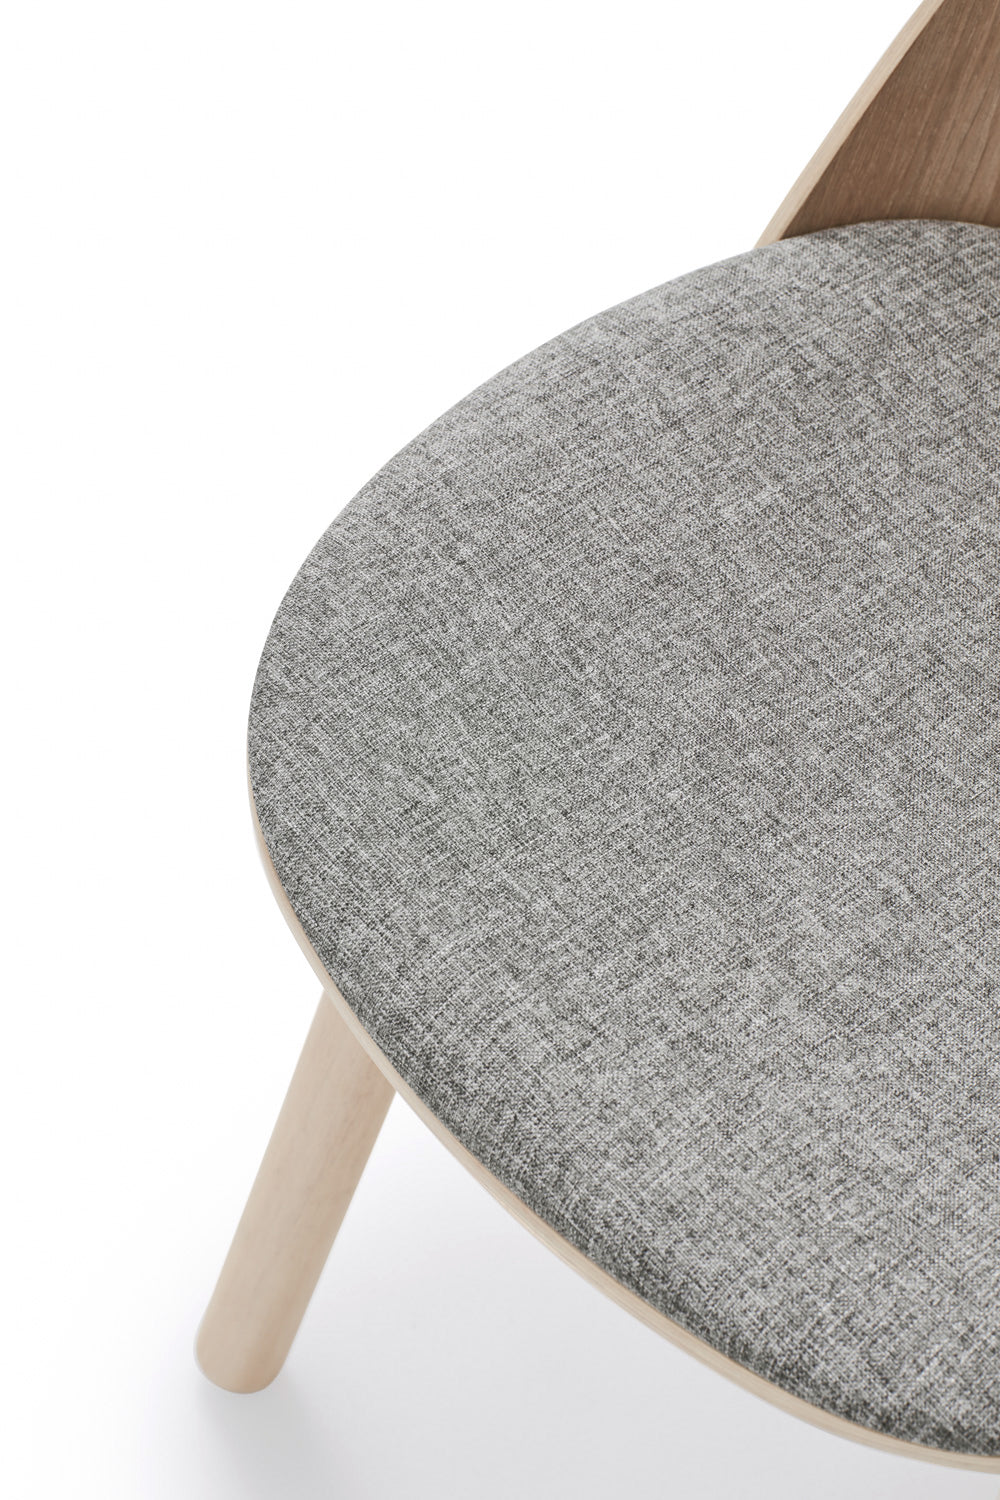 UMA chair grey